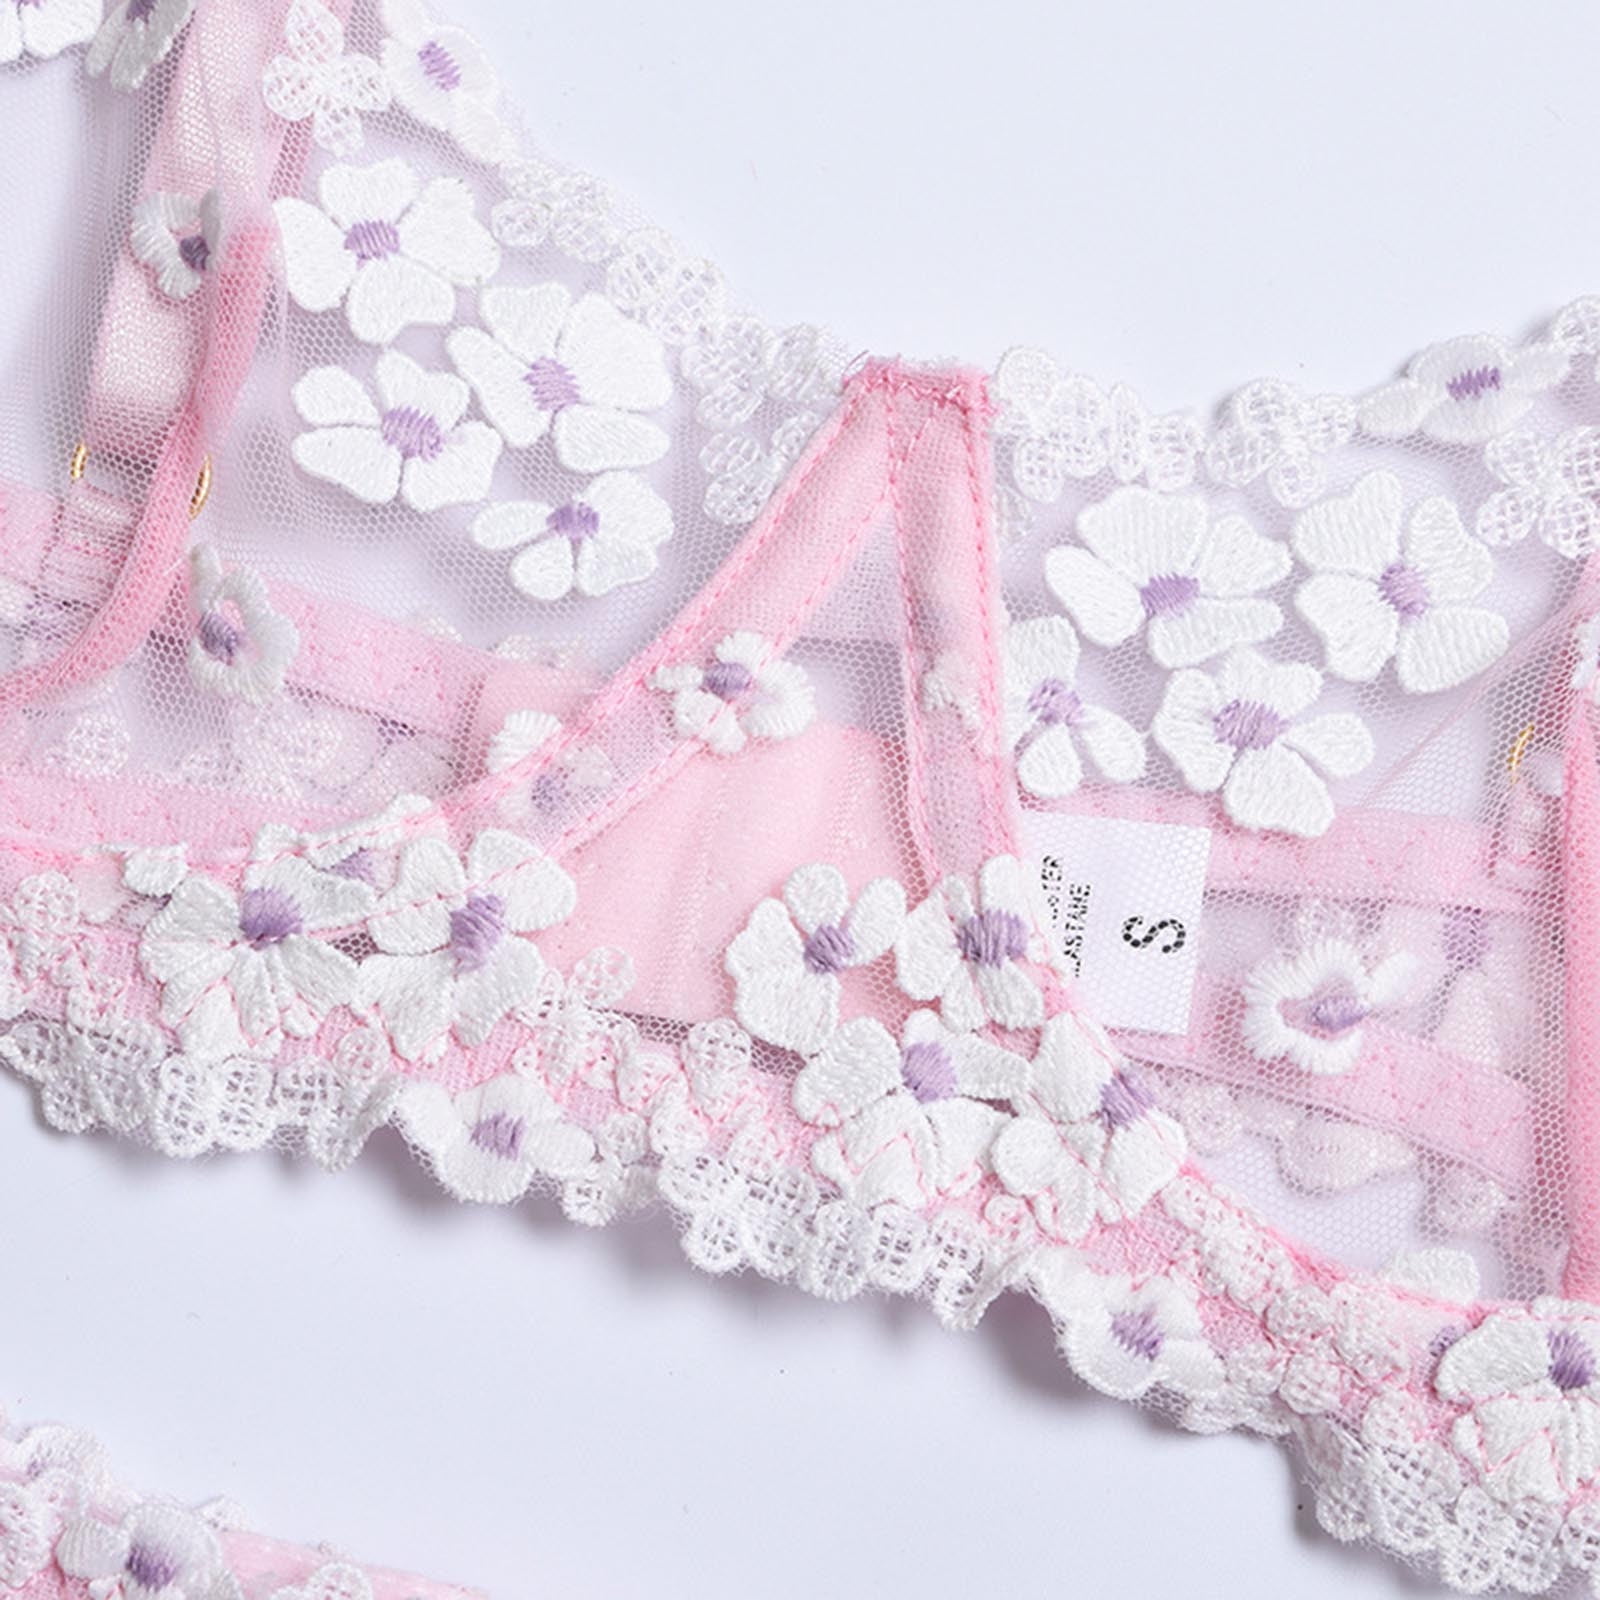 Hfyihgf Women's Sexy Soft Floral Lace Lingerie Set See-Through Underwear  Push Up Underwire Sheer Bra and Bikini Underwear Sets(Pink,XXL)